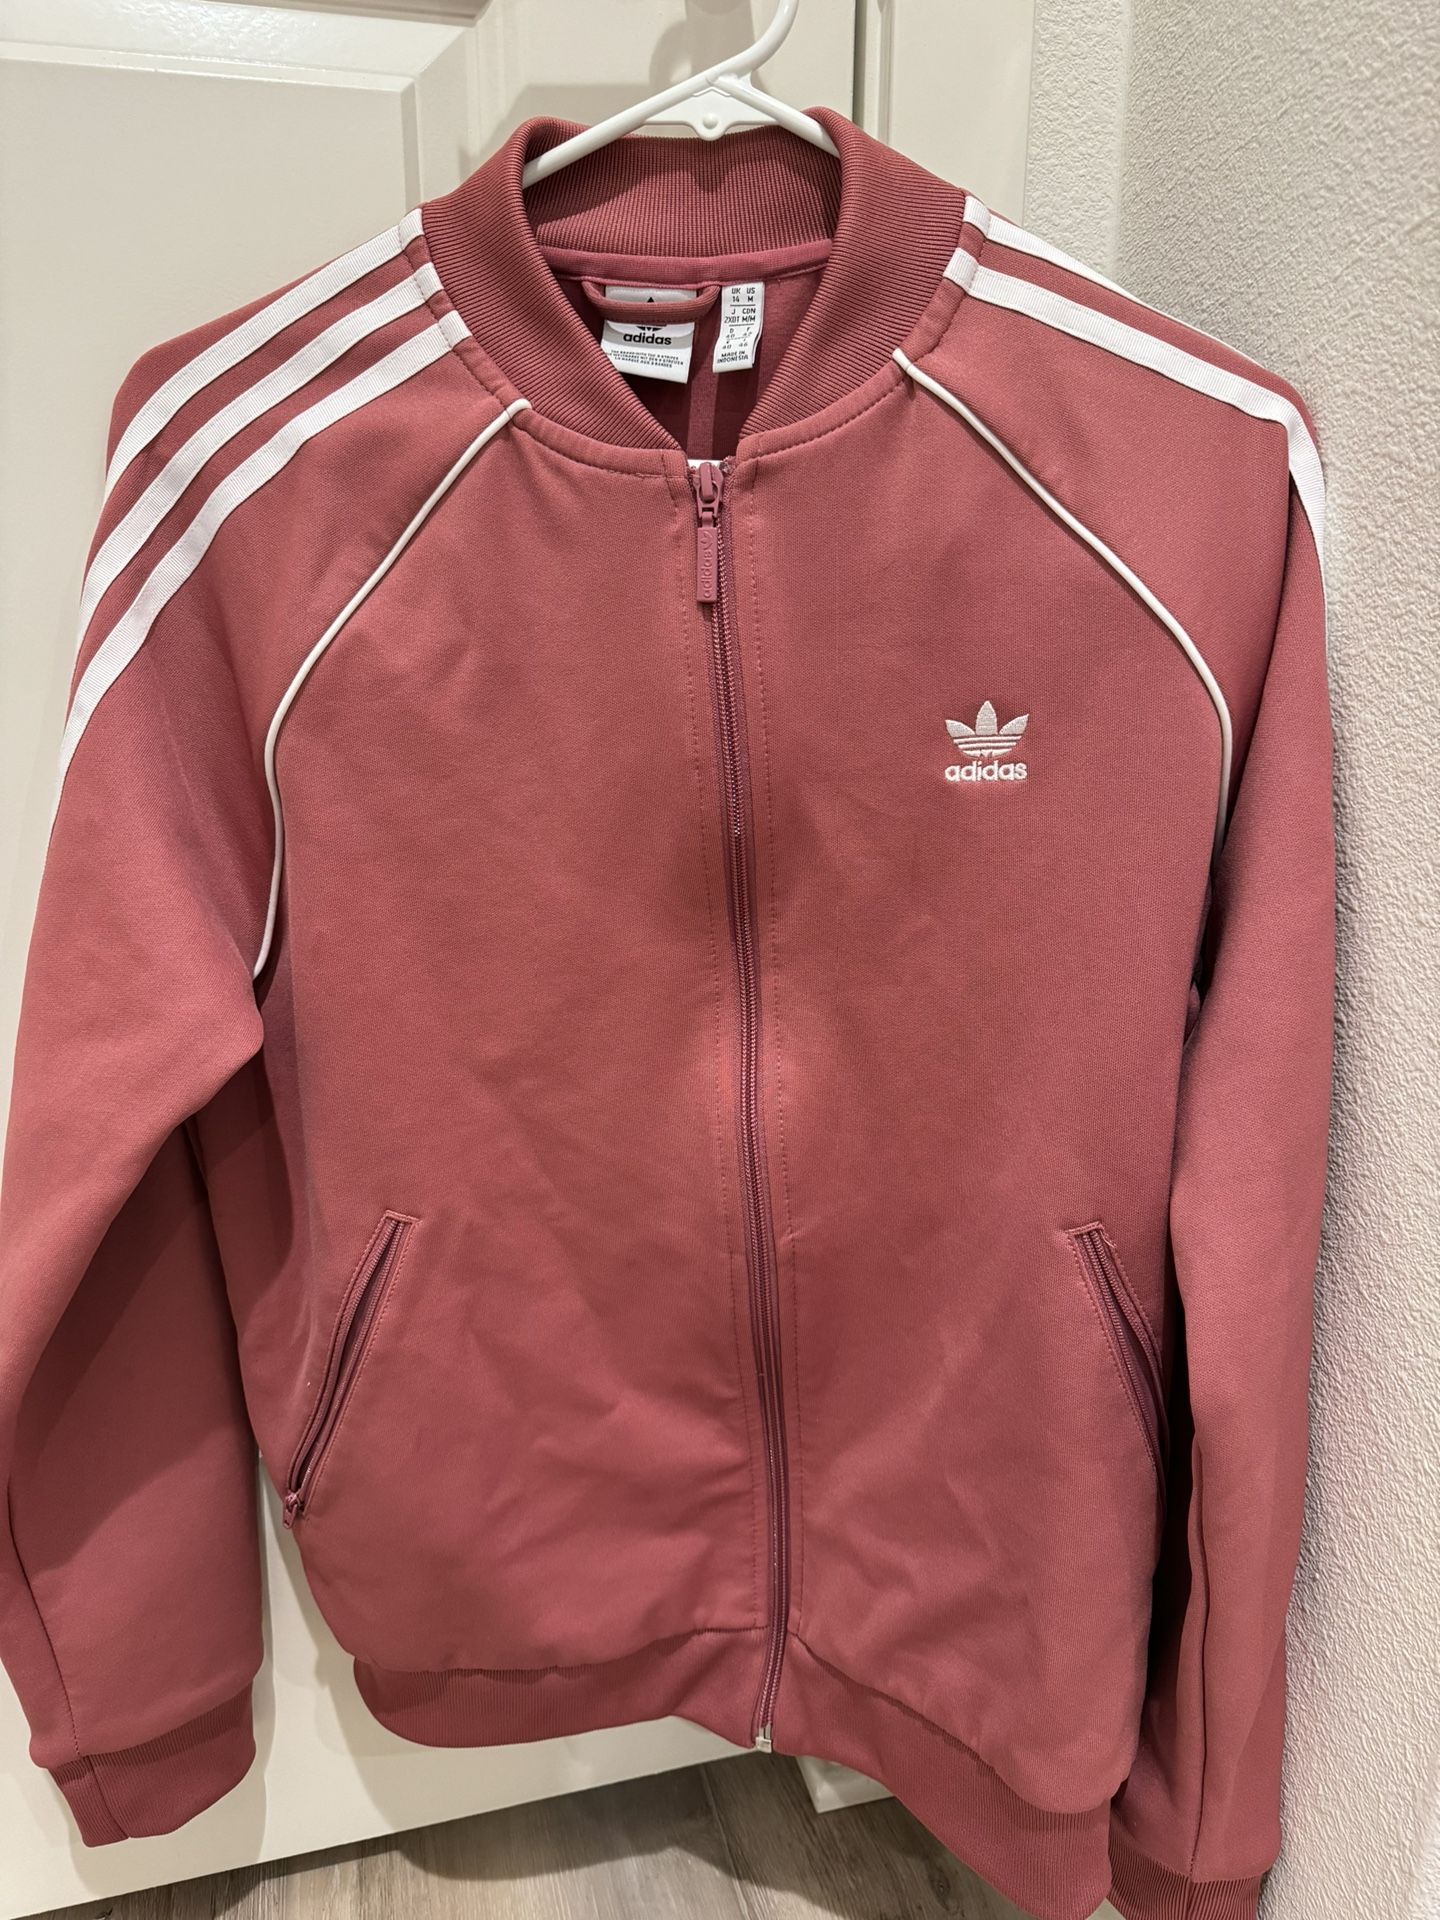 Adidas 3 Stripes Jersey (Pink)